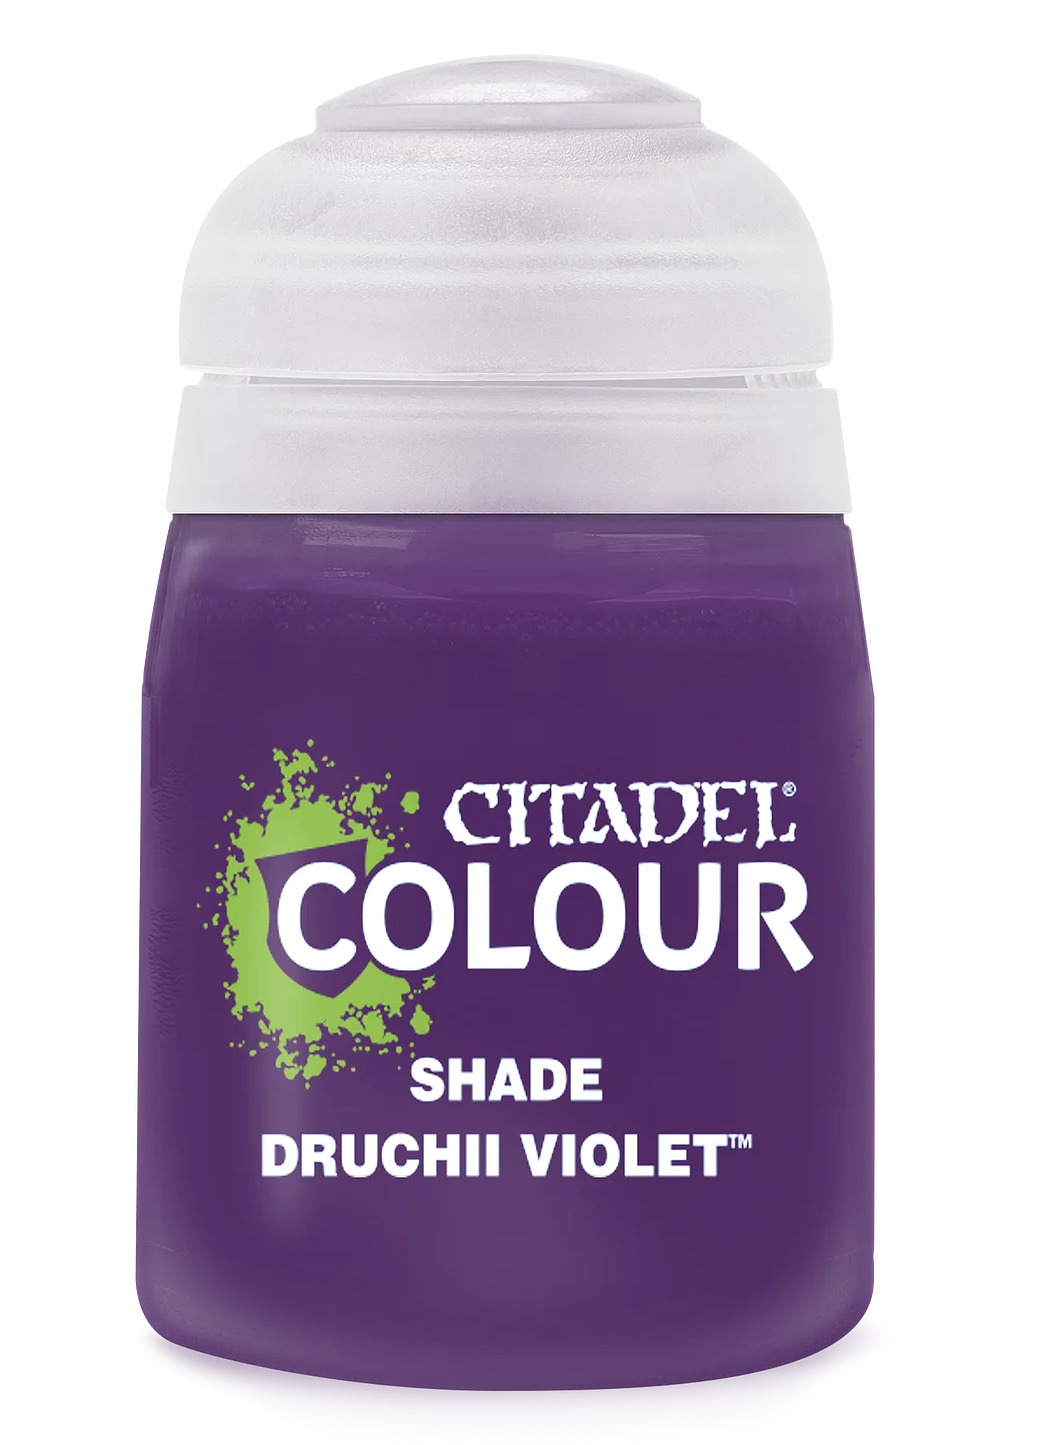 Citadel Shade (Druchii Violet) - tónová barva, fialová 2022